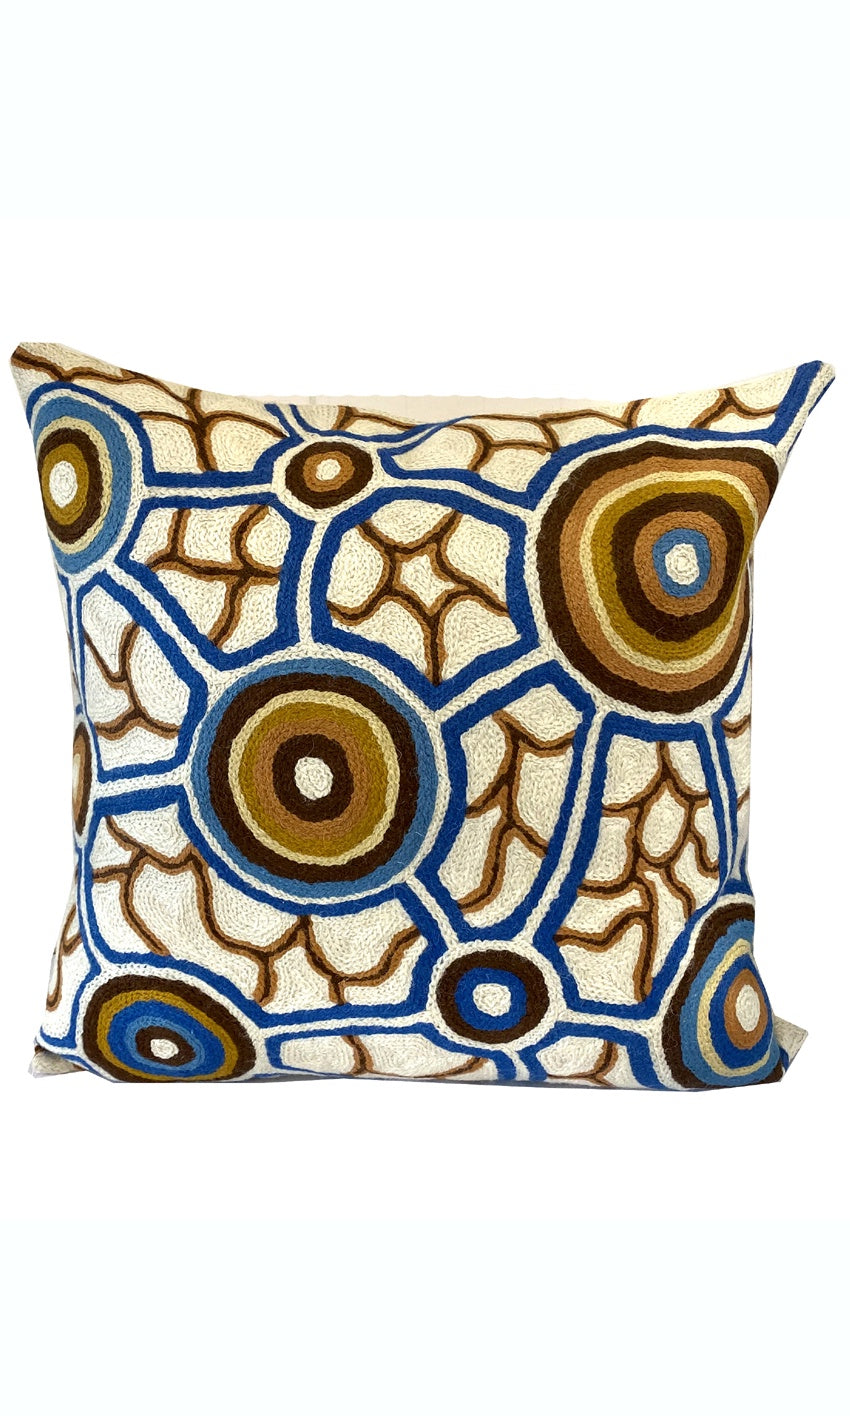 Aboriginal Art Cushion Cover by Bianca Gardener Dodd (2)